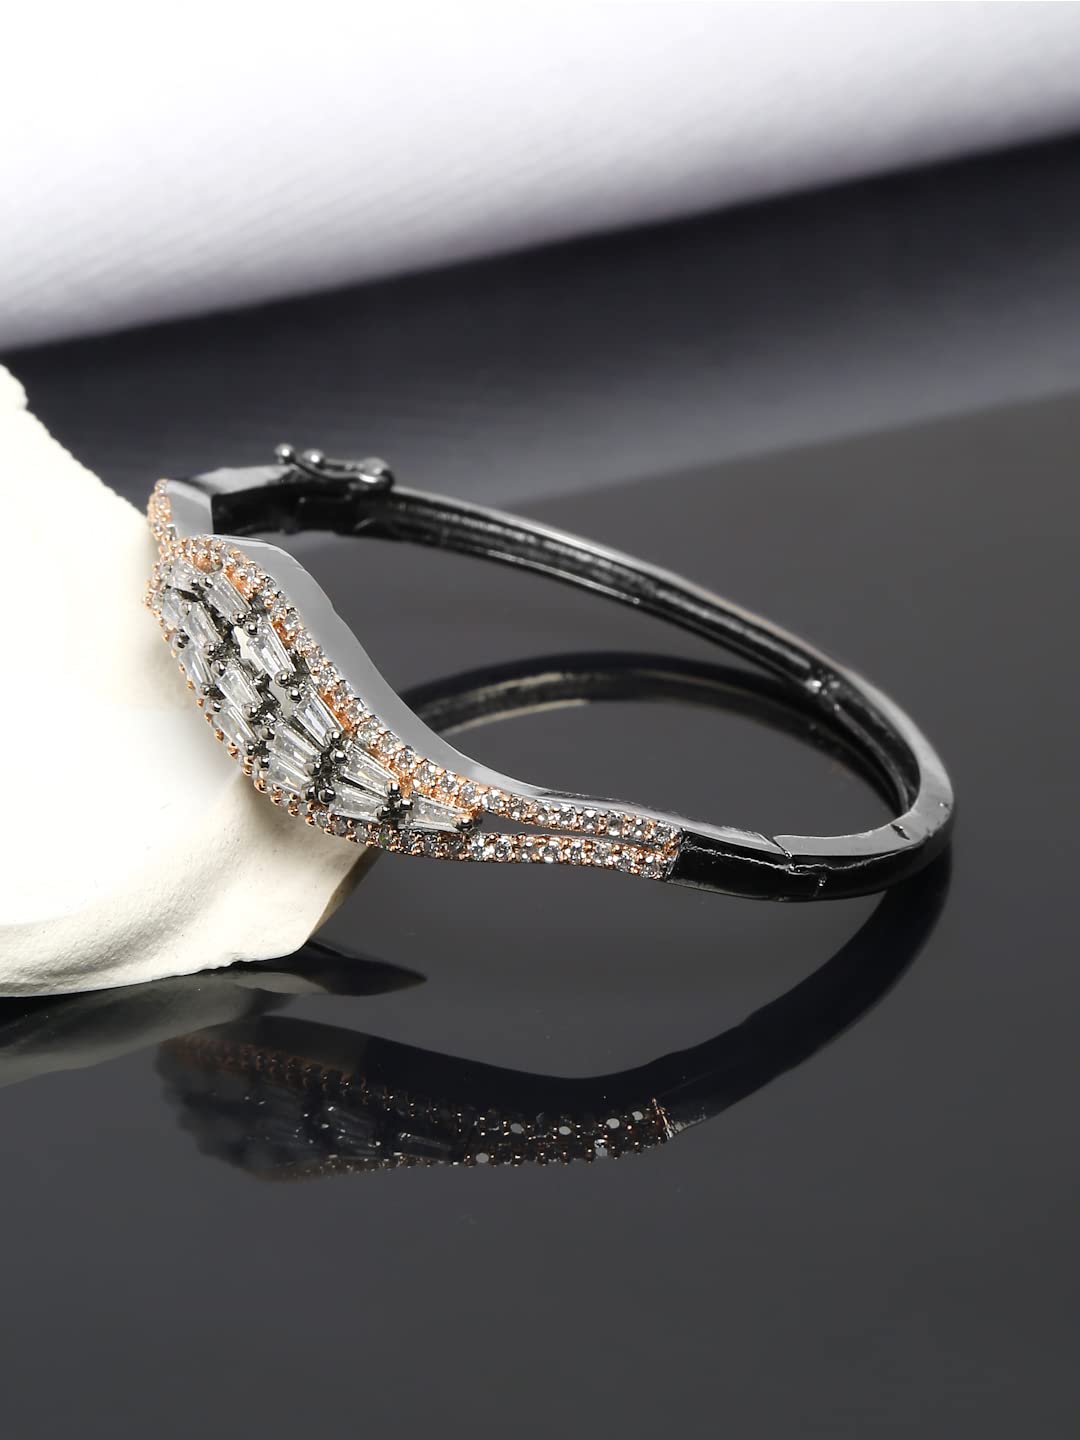 Leaf Shaped American Diamond Gold Plated Bangles Jewellery Bracelet Women  Girls | eBay